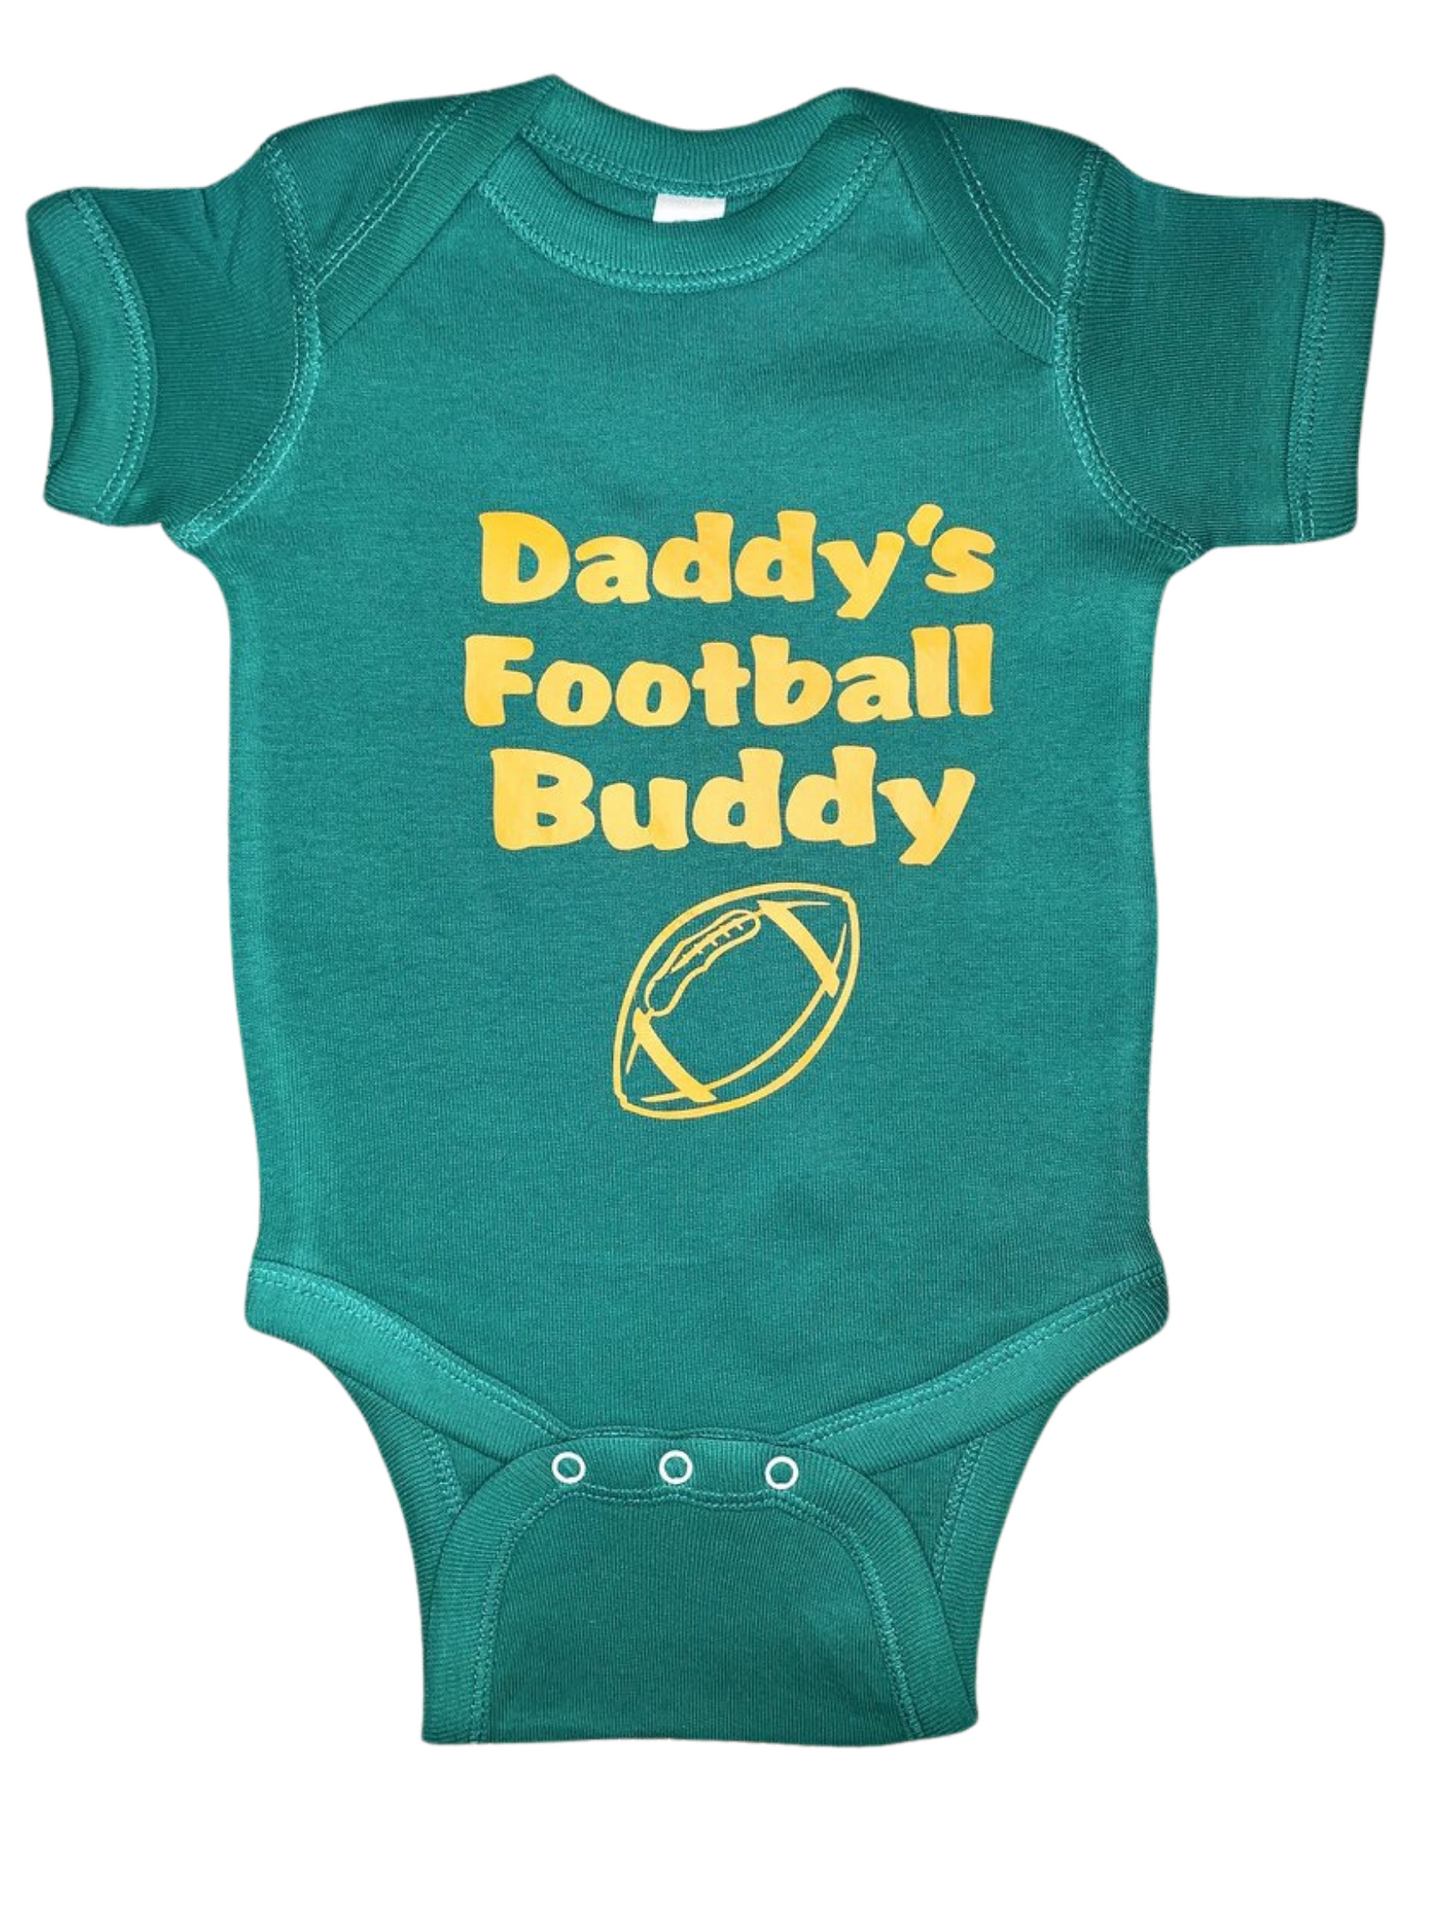 Mini Me Baby Gear ~ Daddy’s Football Buddy Baby Tee